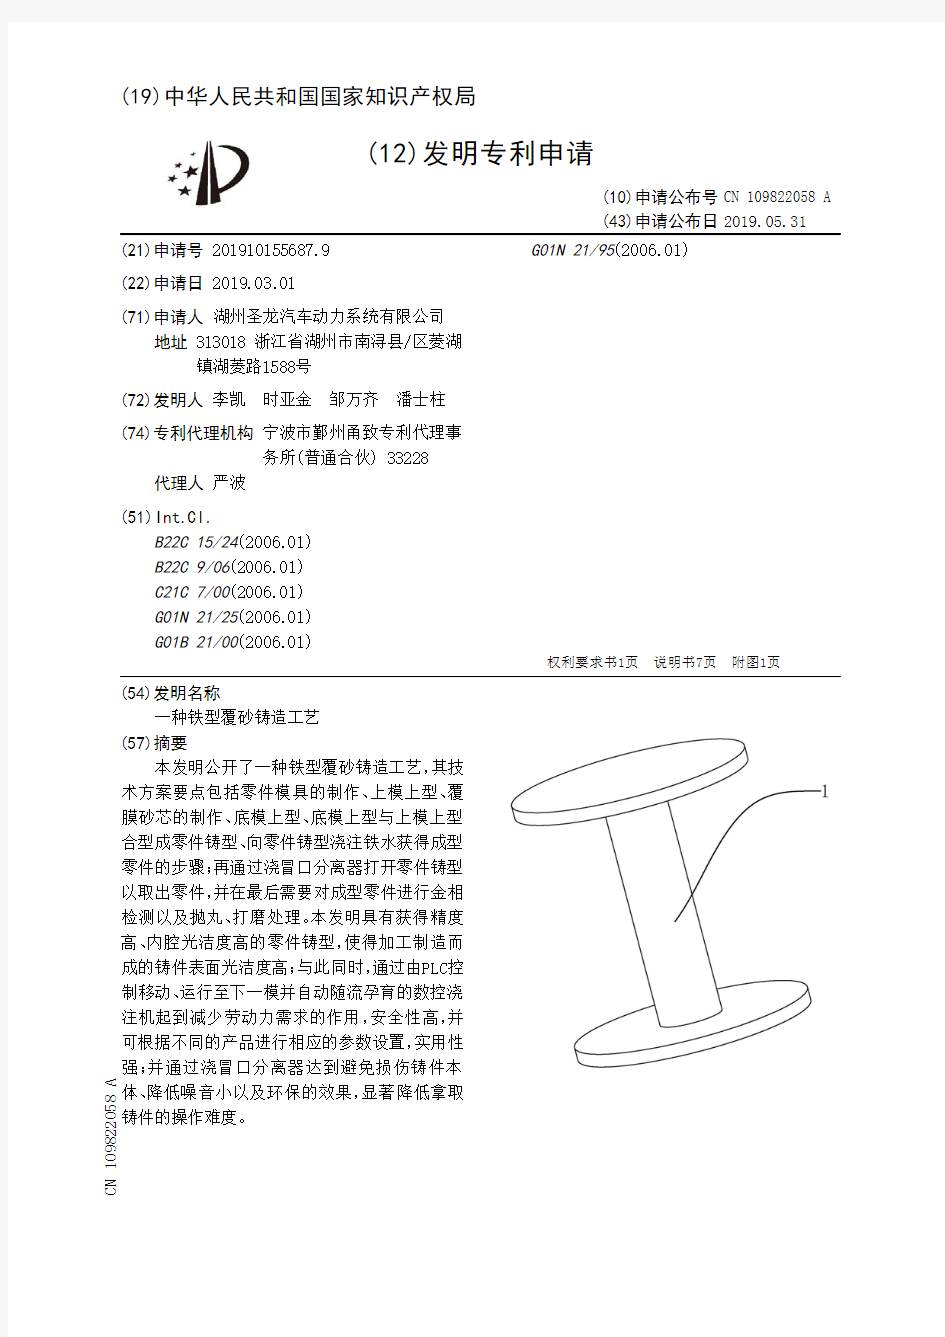 【CN109822058A】一种铁型覆砂铸造工艺【专利】